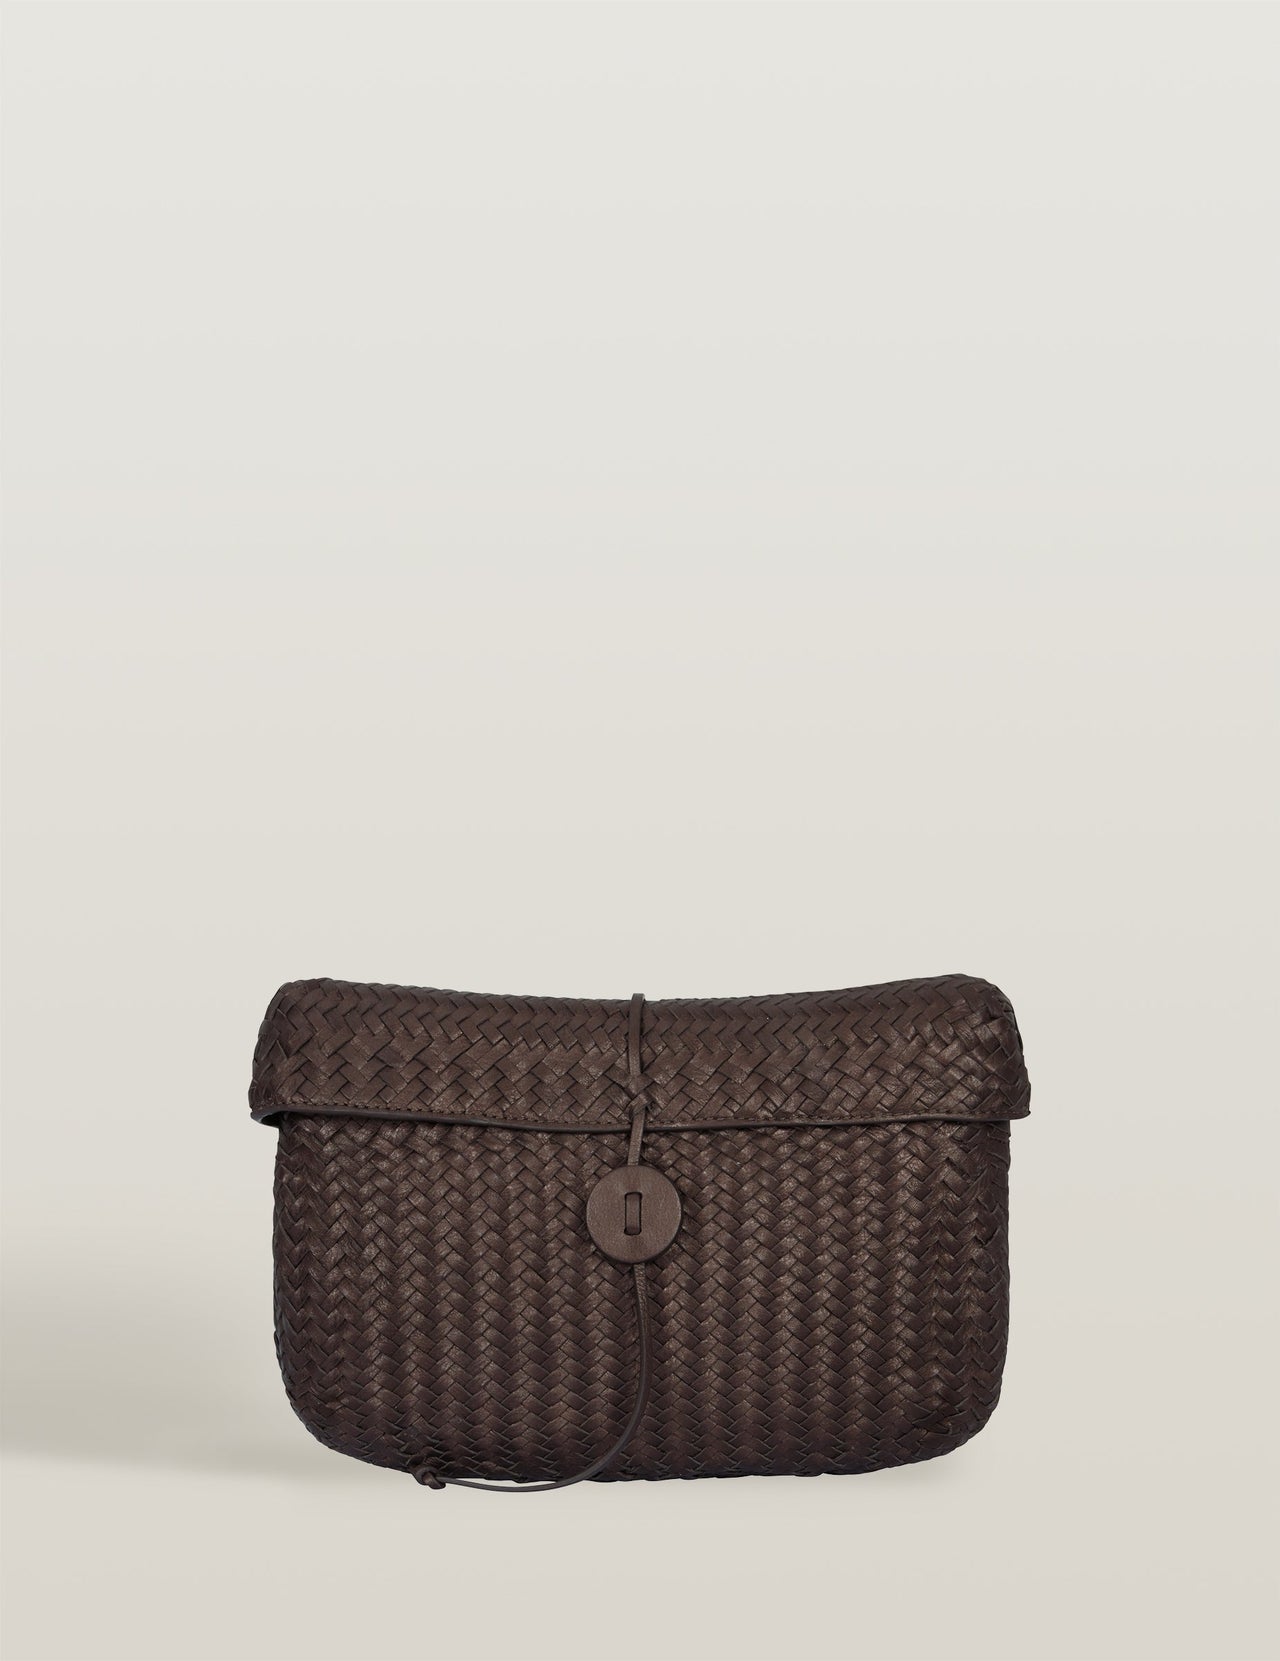  Metallic Brown Handwoven Leather Clutch Bag | Varana 